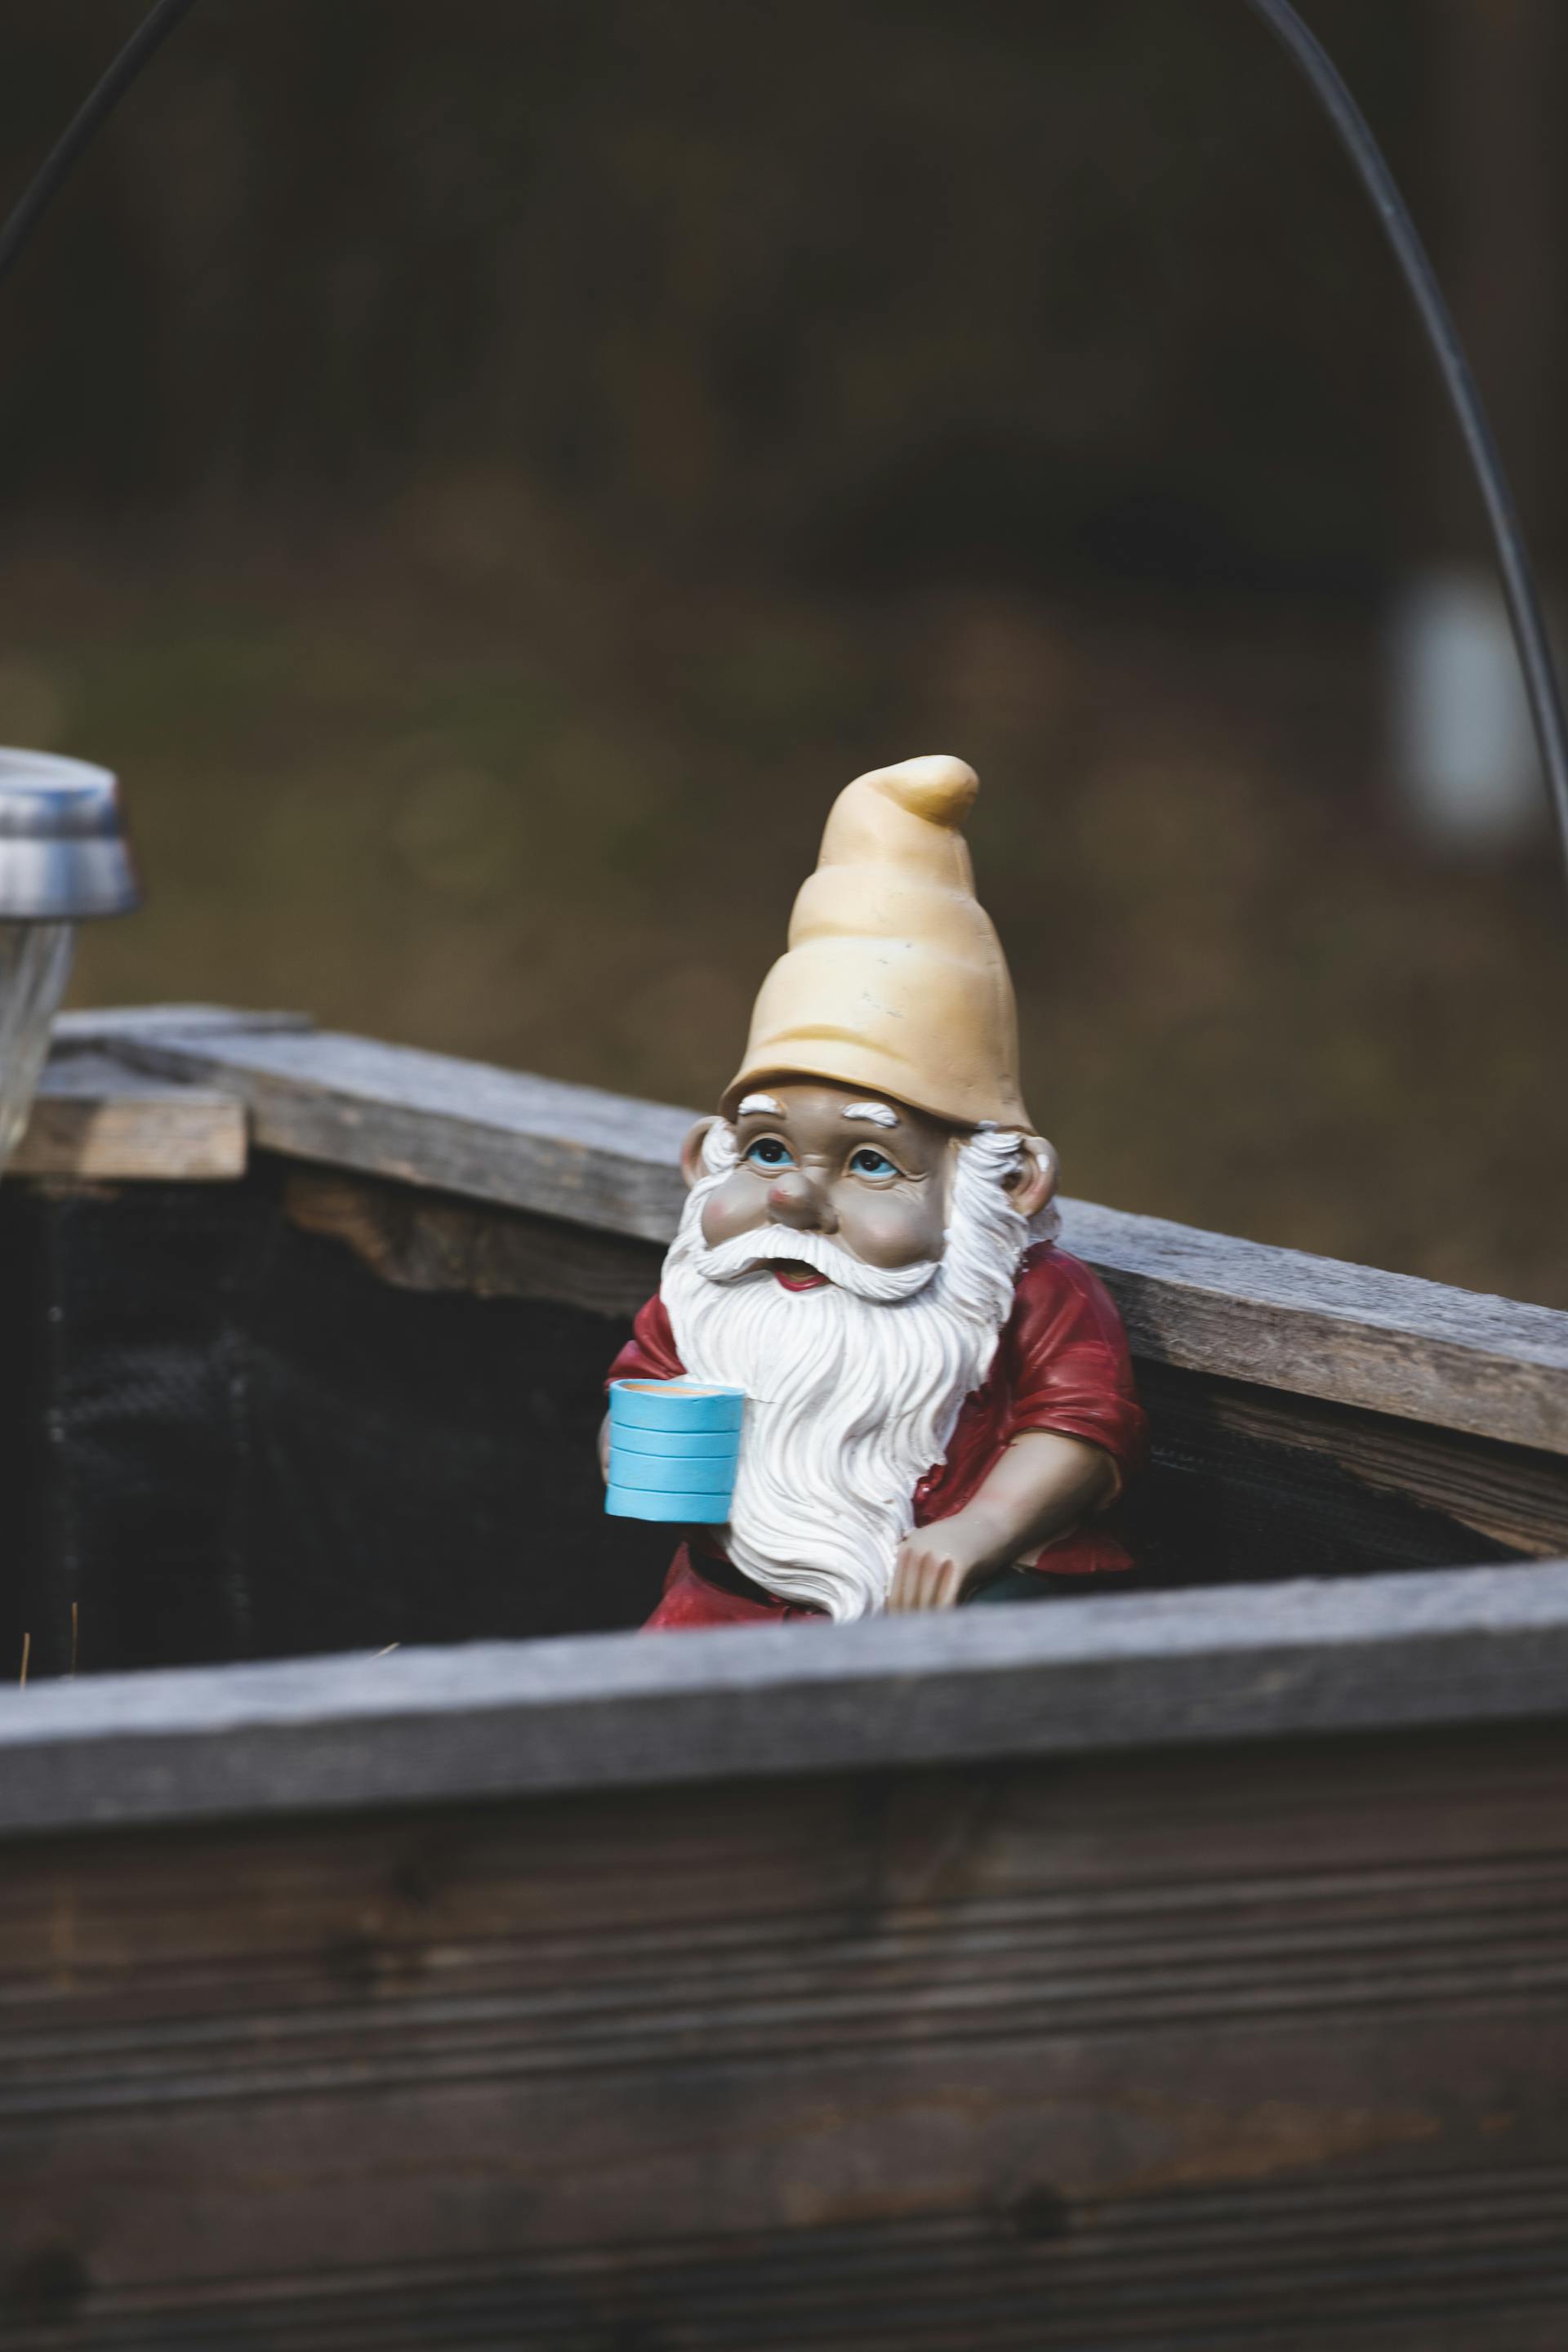 A decorative garden gnome | Source: Pexels